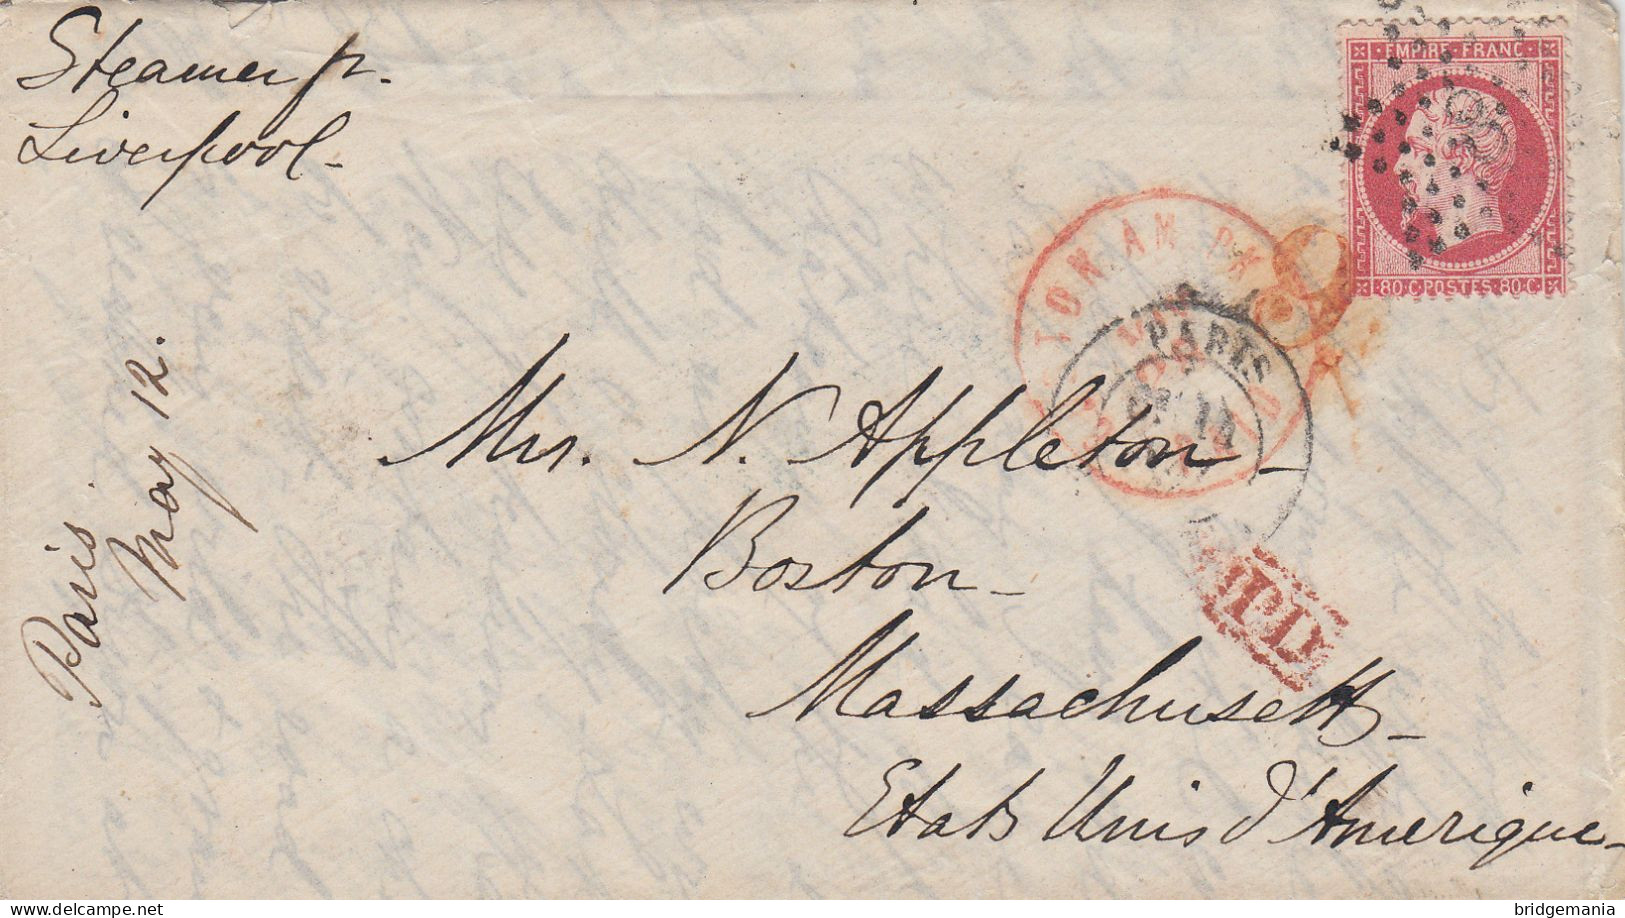 MTM141 - 1867 TRANSATLANTIC LETTER FRANCE TO USA Steamer CITY OF BOSTON THE INMAN LINE - PAID - Storia Postale